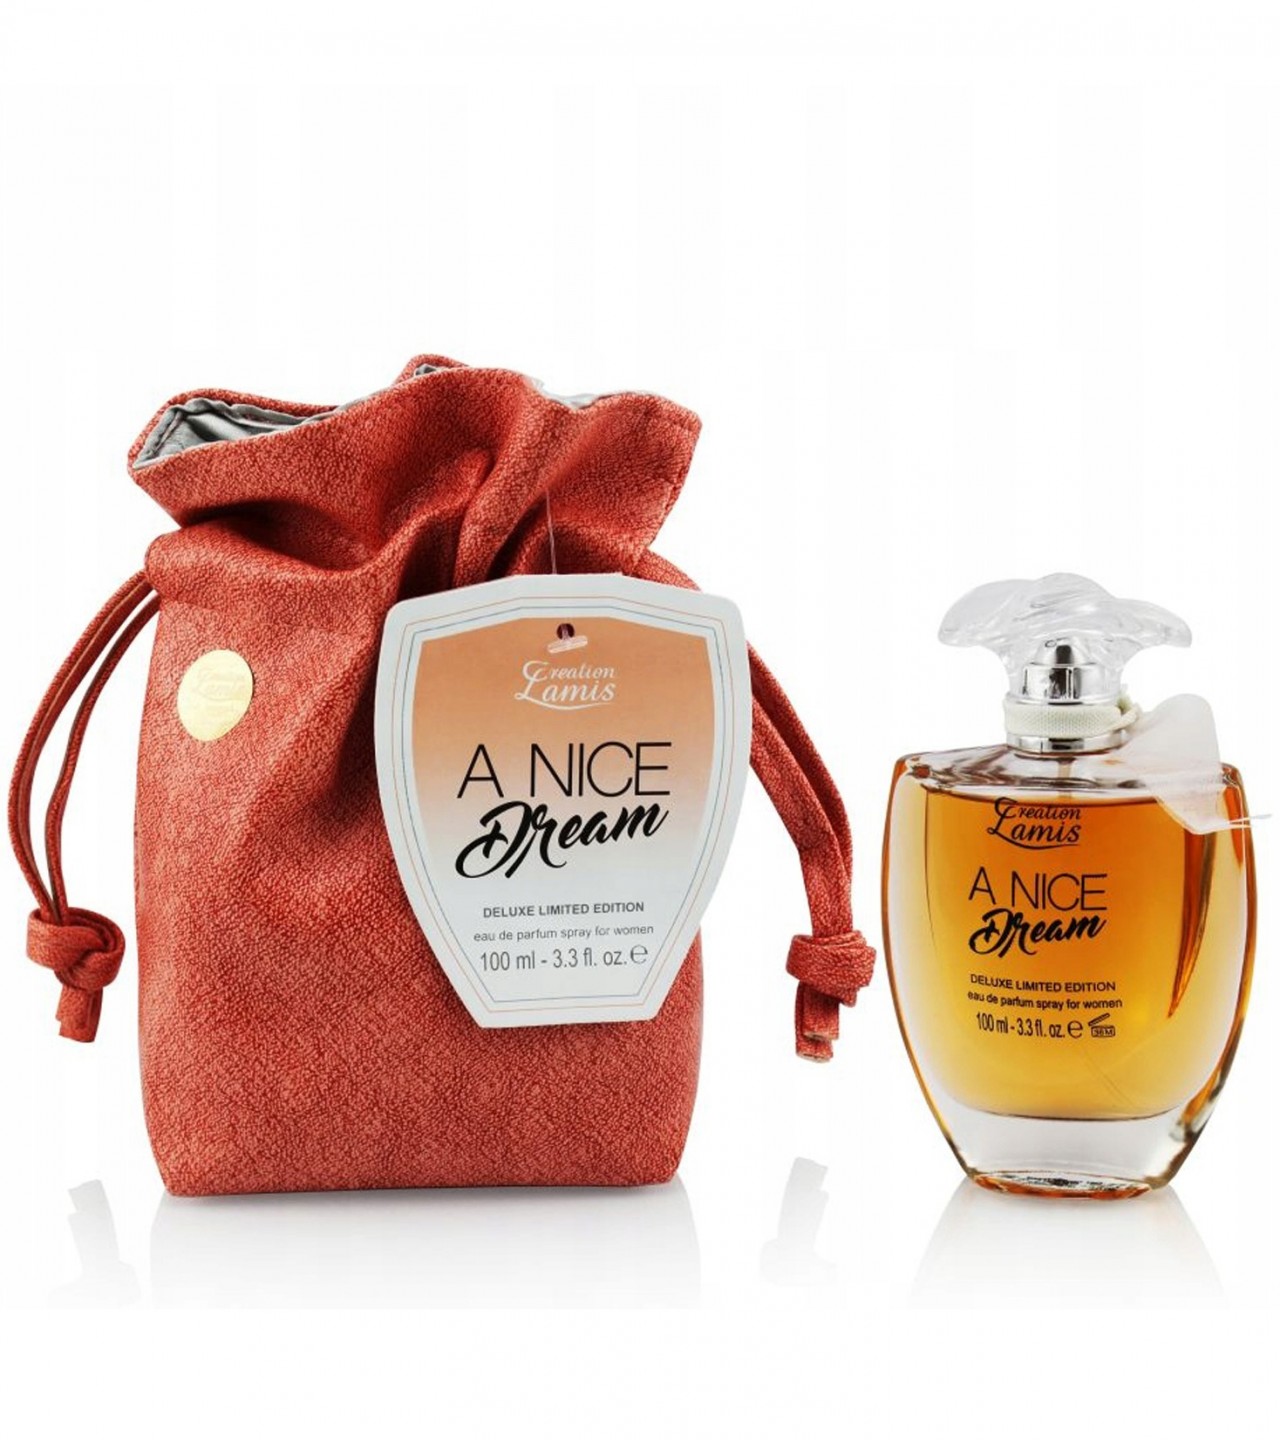 Creation Lamis A Nice dream Perfume For Women - 100 ml